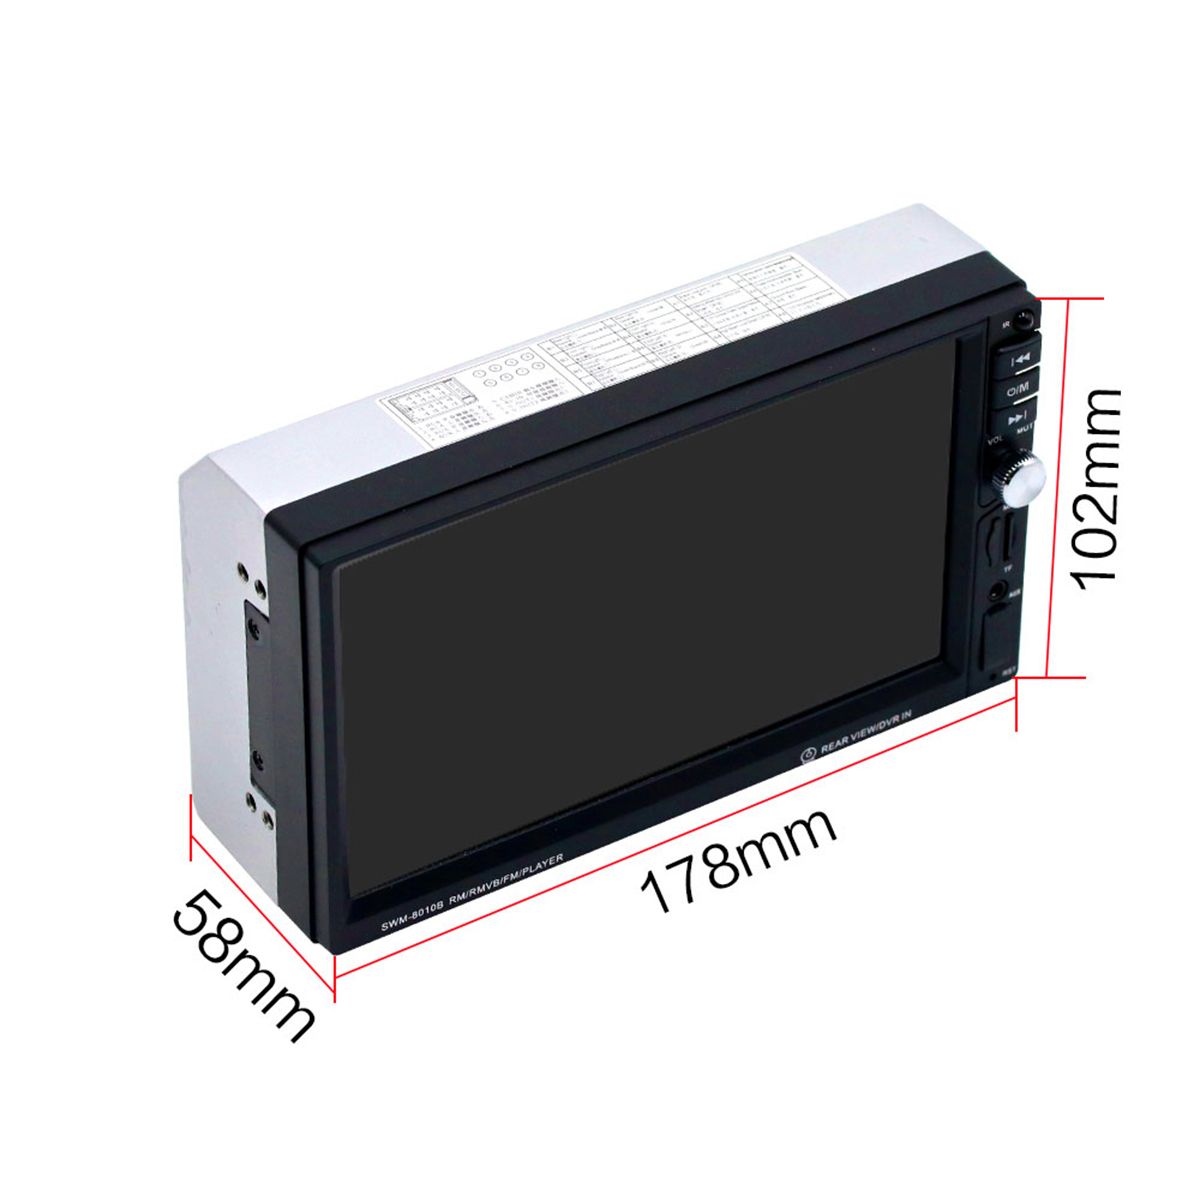 SWM-8010B-7-Inch-Touch-2-Din-MP5-Stereo-Car-DVD-Player-bluetooth-FM-Radio-Rear-Camera-1274697